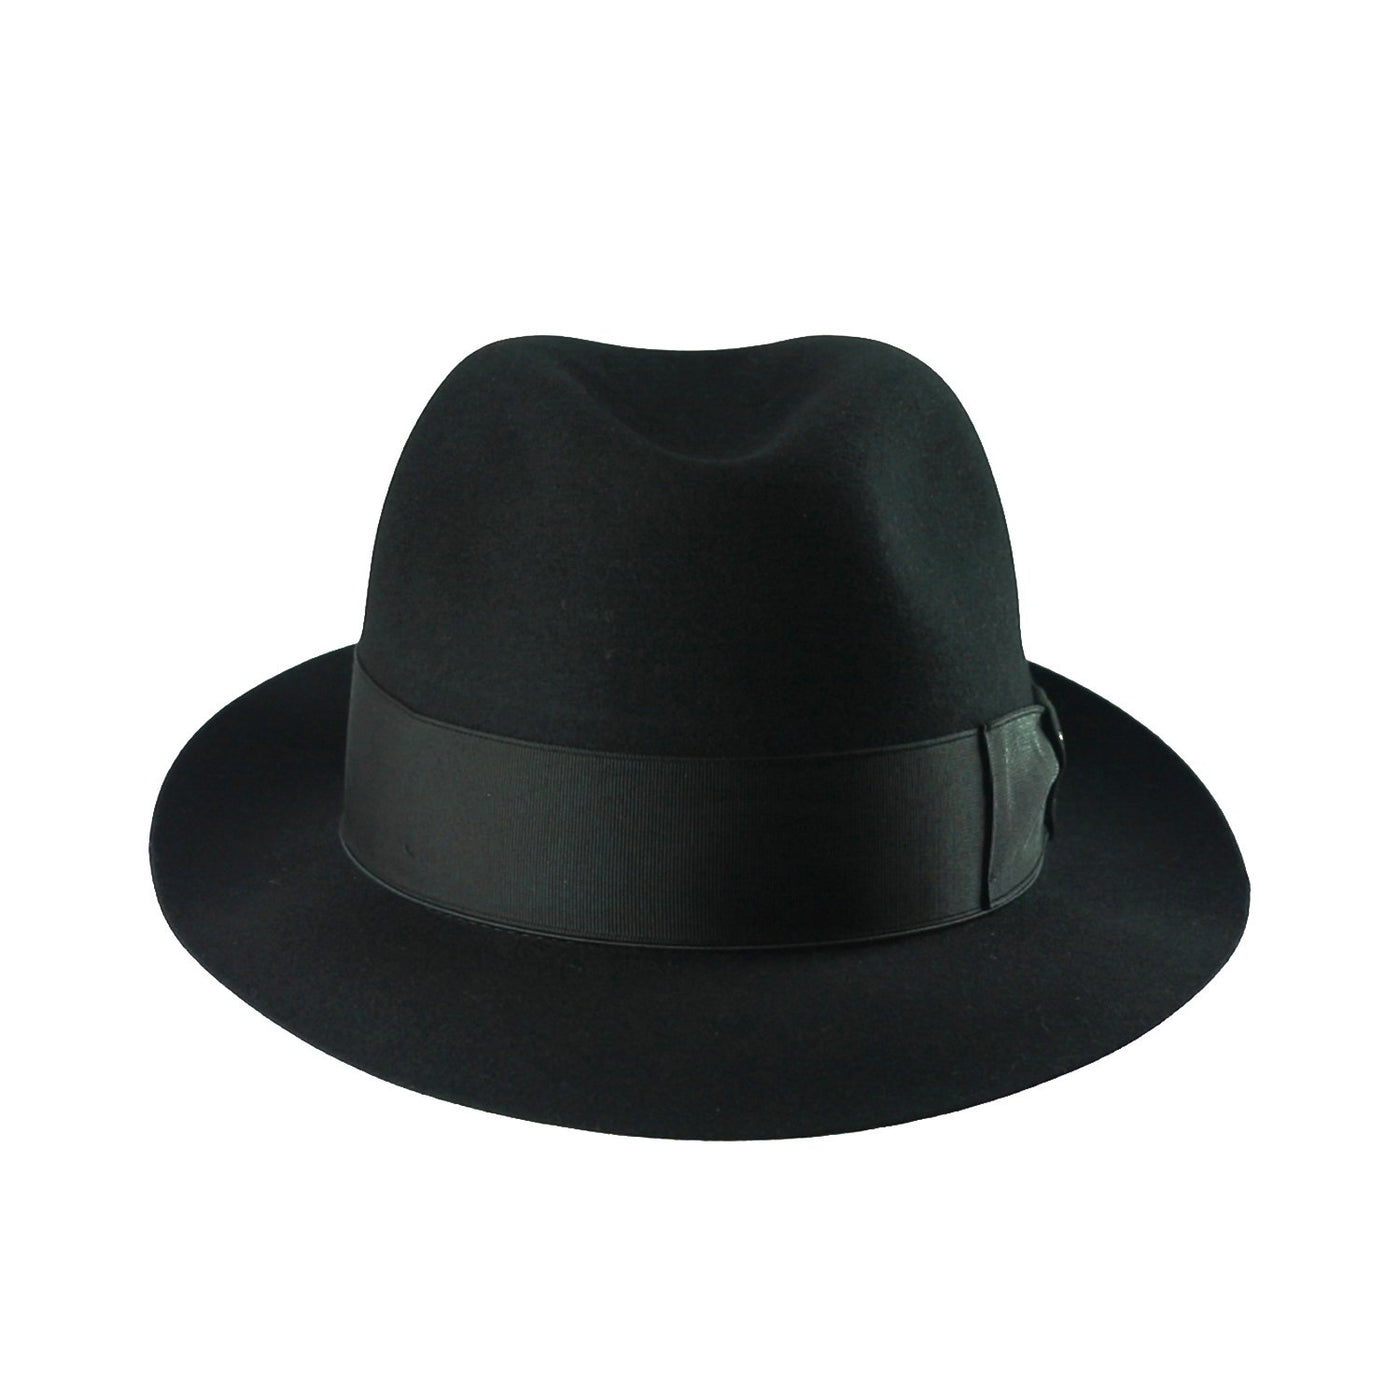 Claudio 178 - Black, product_type] - Borsalino for Atica fedora hat